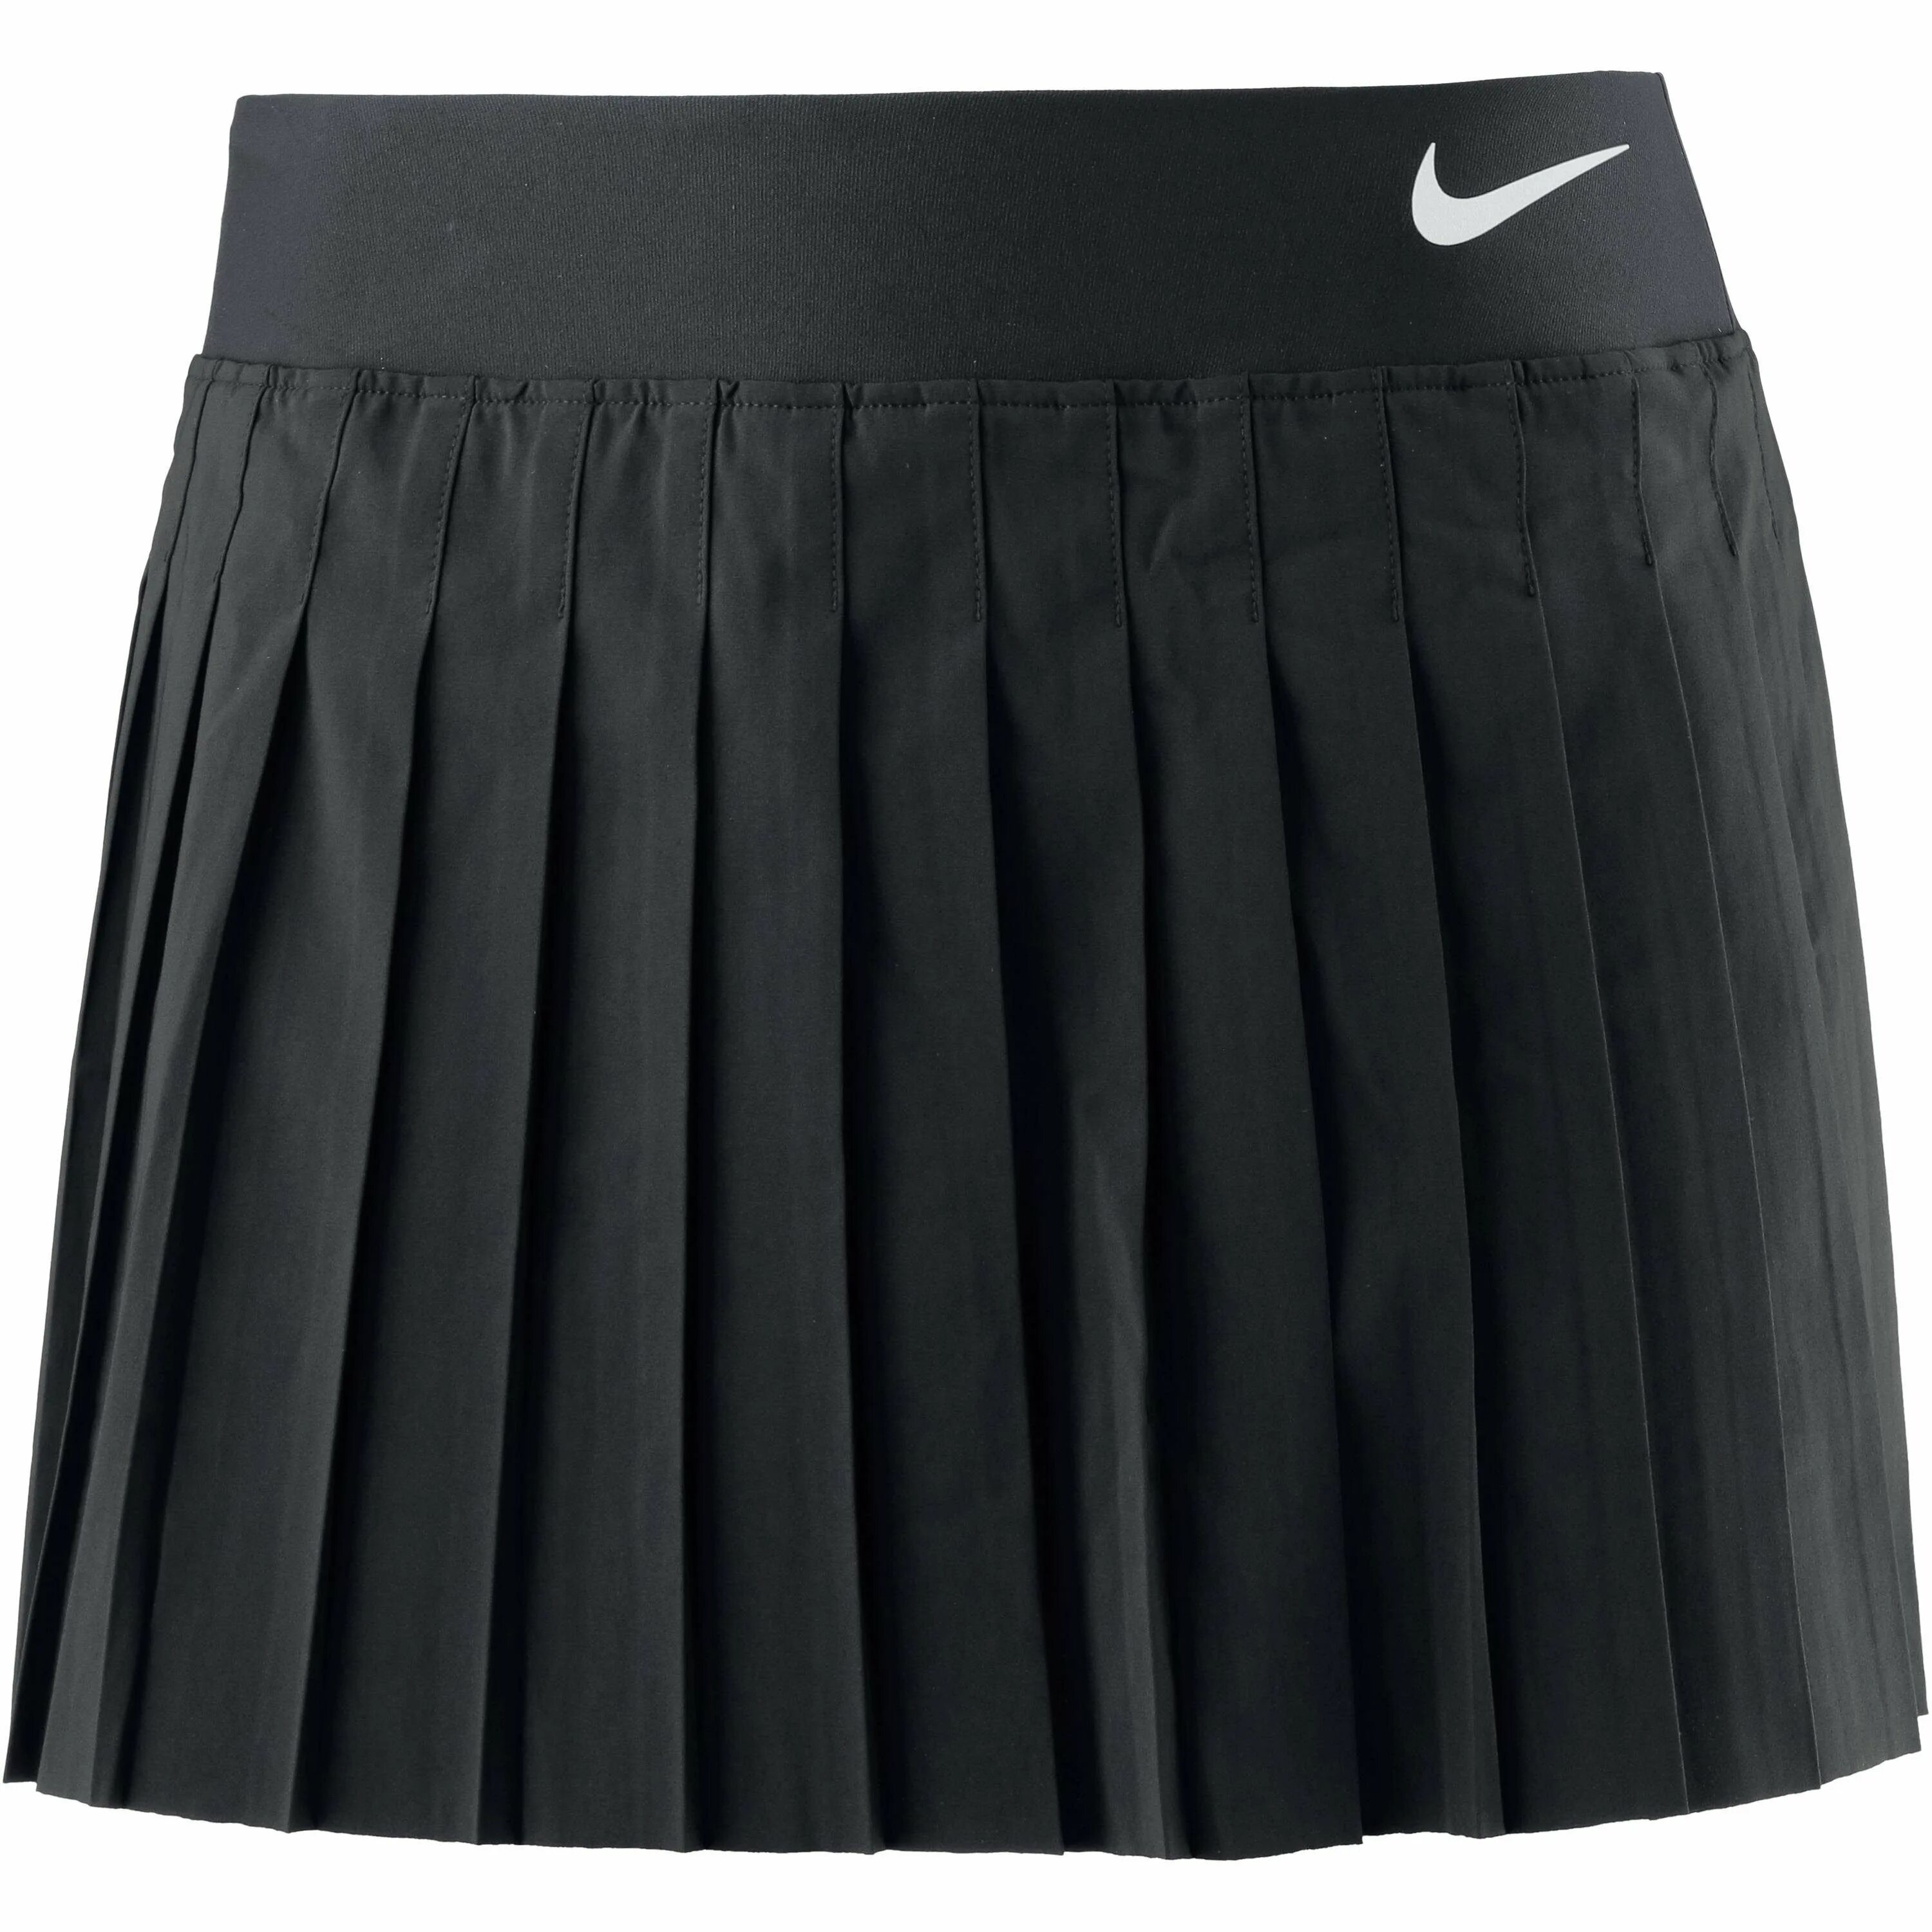 W6235r Black теннисная юбка Alo. Befree юбка теннисная черная. Теннисная юбка 2020 тренд. Теннисная юбка Ив сен Лоран. Теннисные юбки в школу